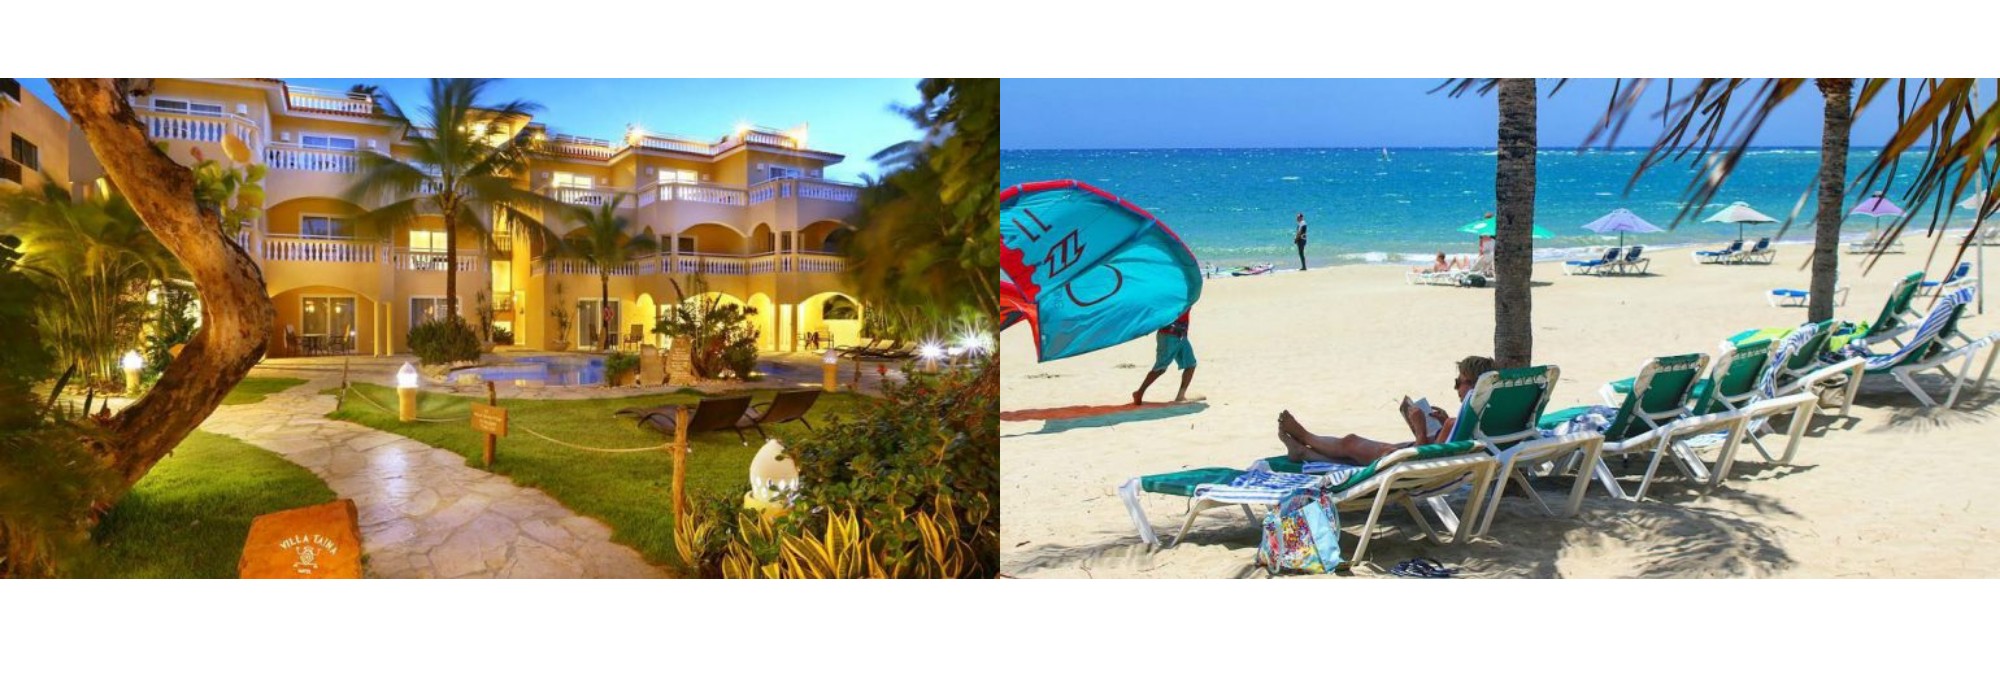 4 Star Beachfront Hotel in Cabarete Dominican Republic